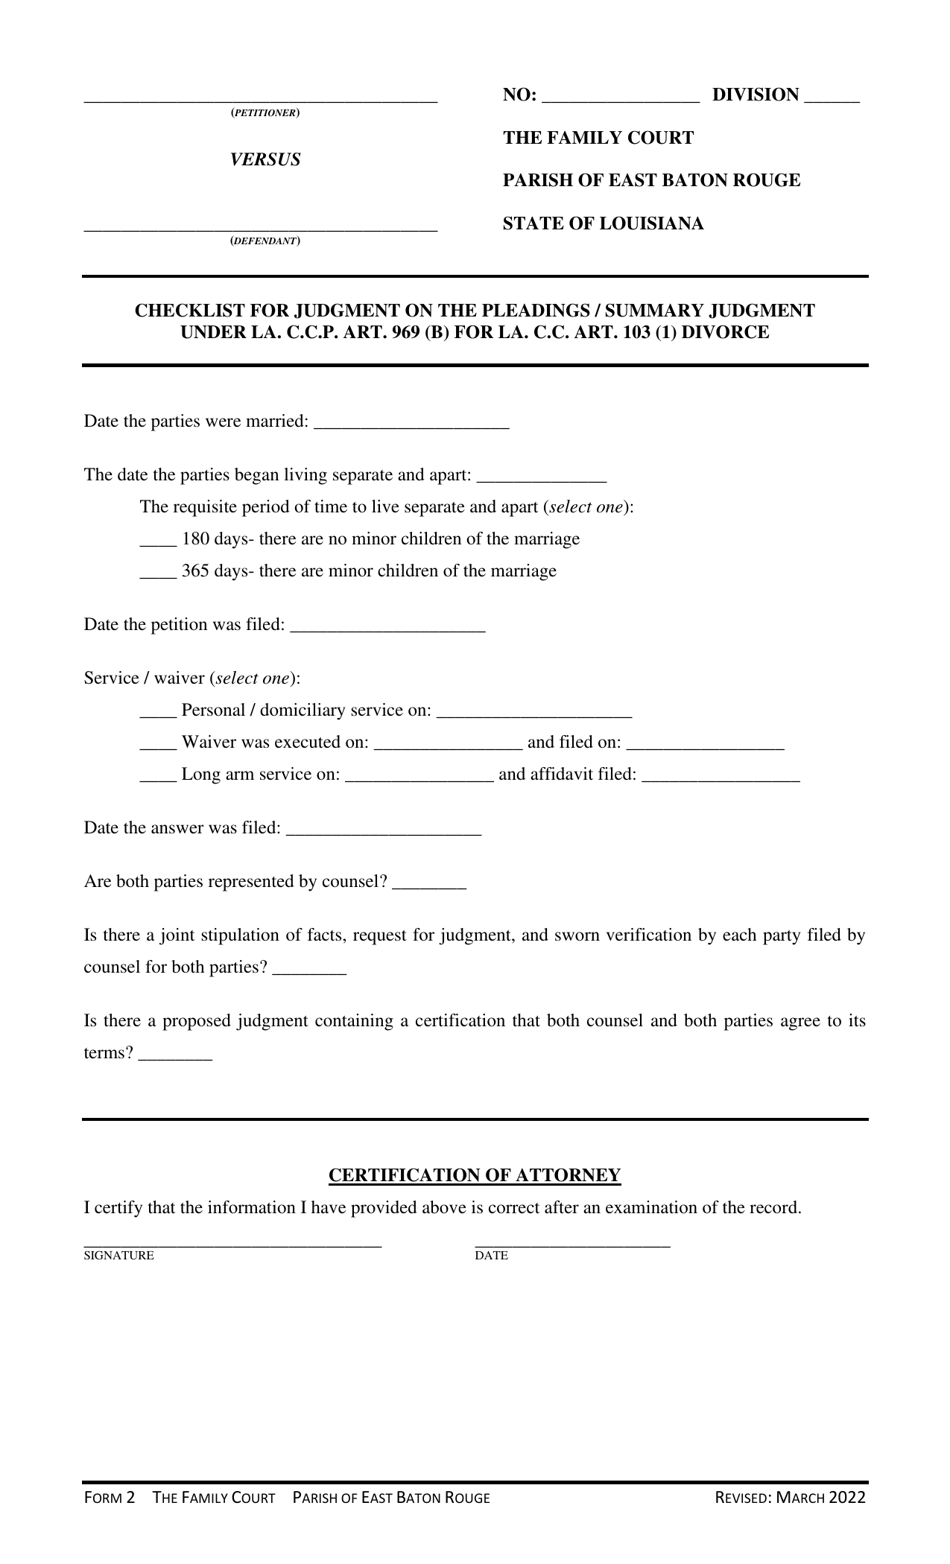 Form 2 Checklist for Judgment on the Pleadings/Summary Judgment Under La. C.c.p. Art. 969 (B) for La. C.c. Art. 103 (1) Divorce - Parish of East Baton Rouge, Louisiana, Page 1